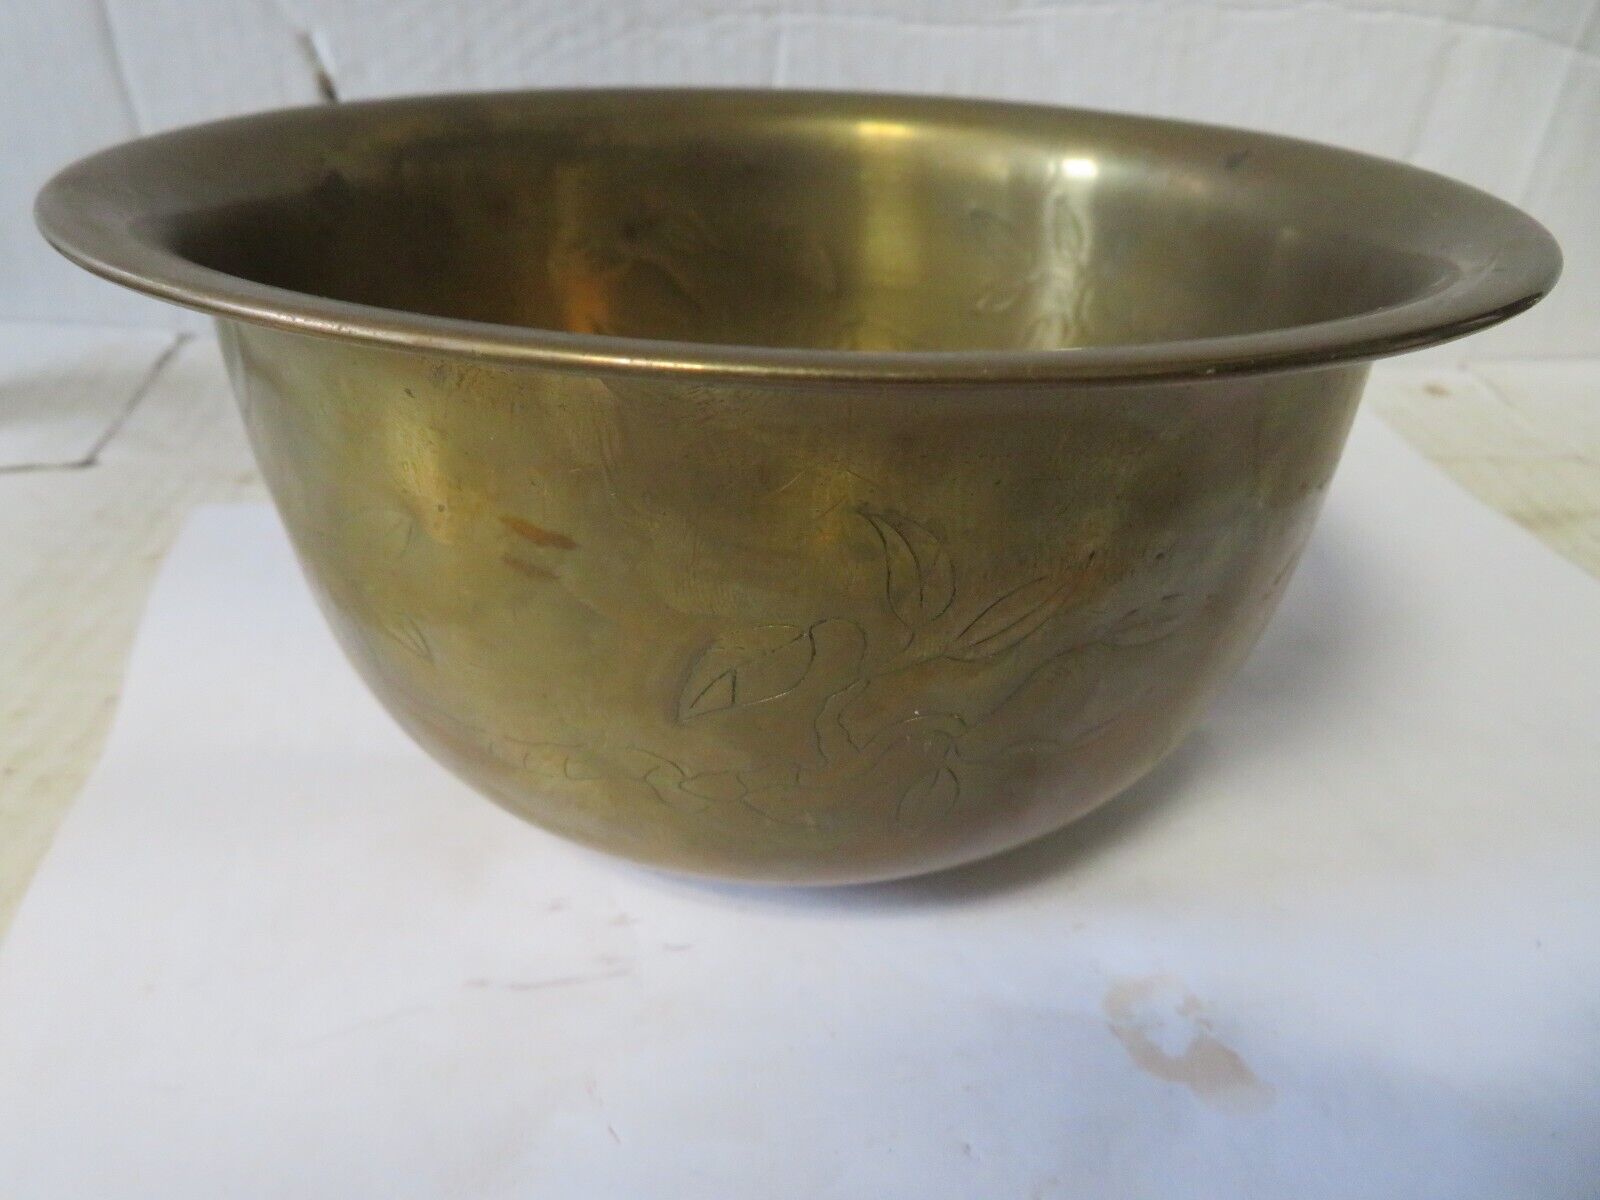 Vintage Solid Brass Bowl Made In Korea 7